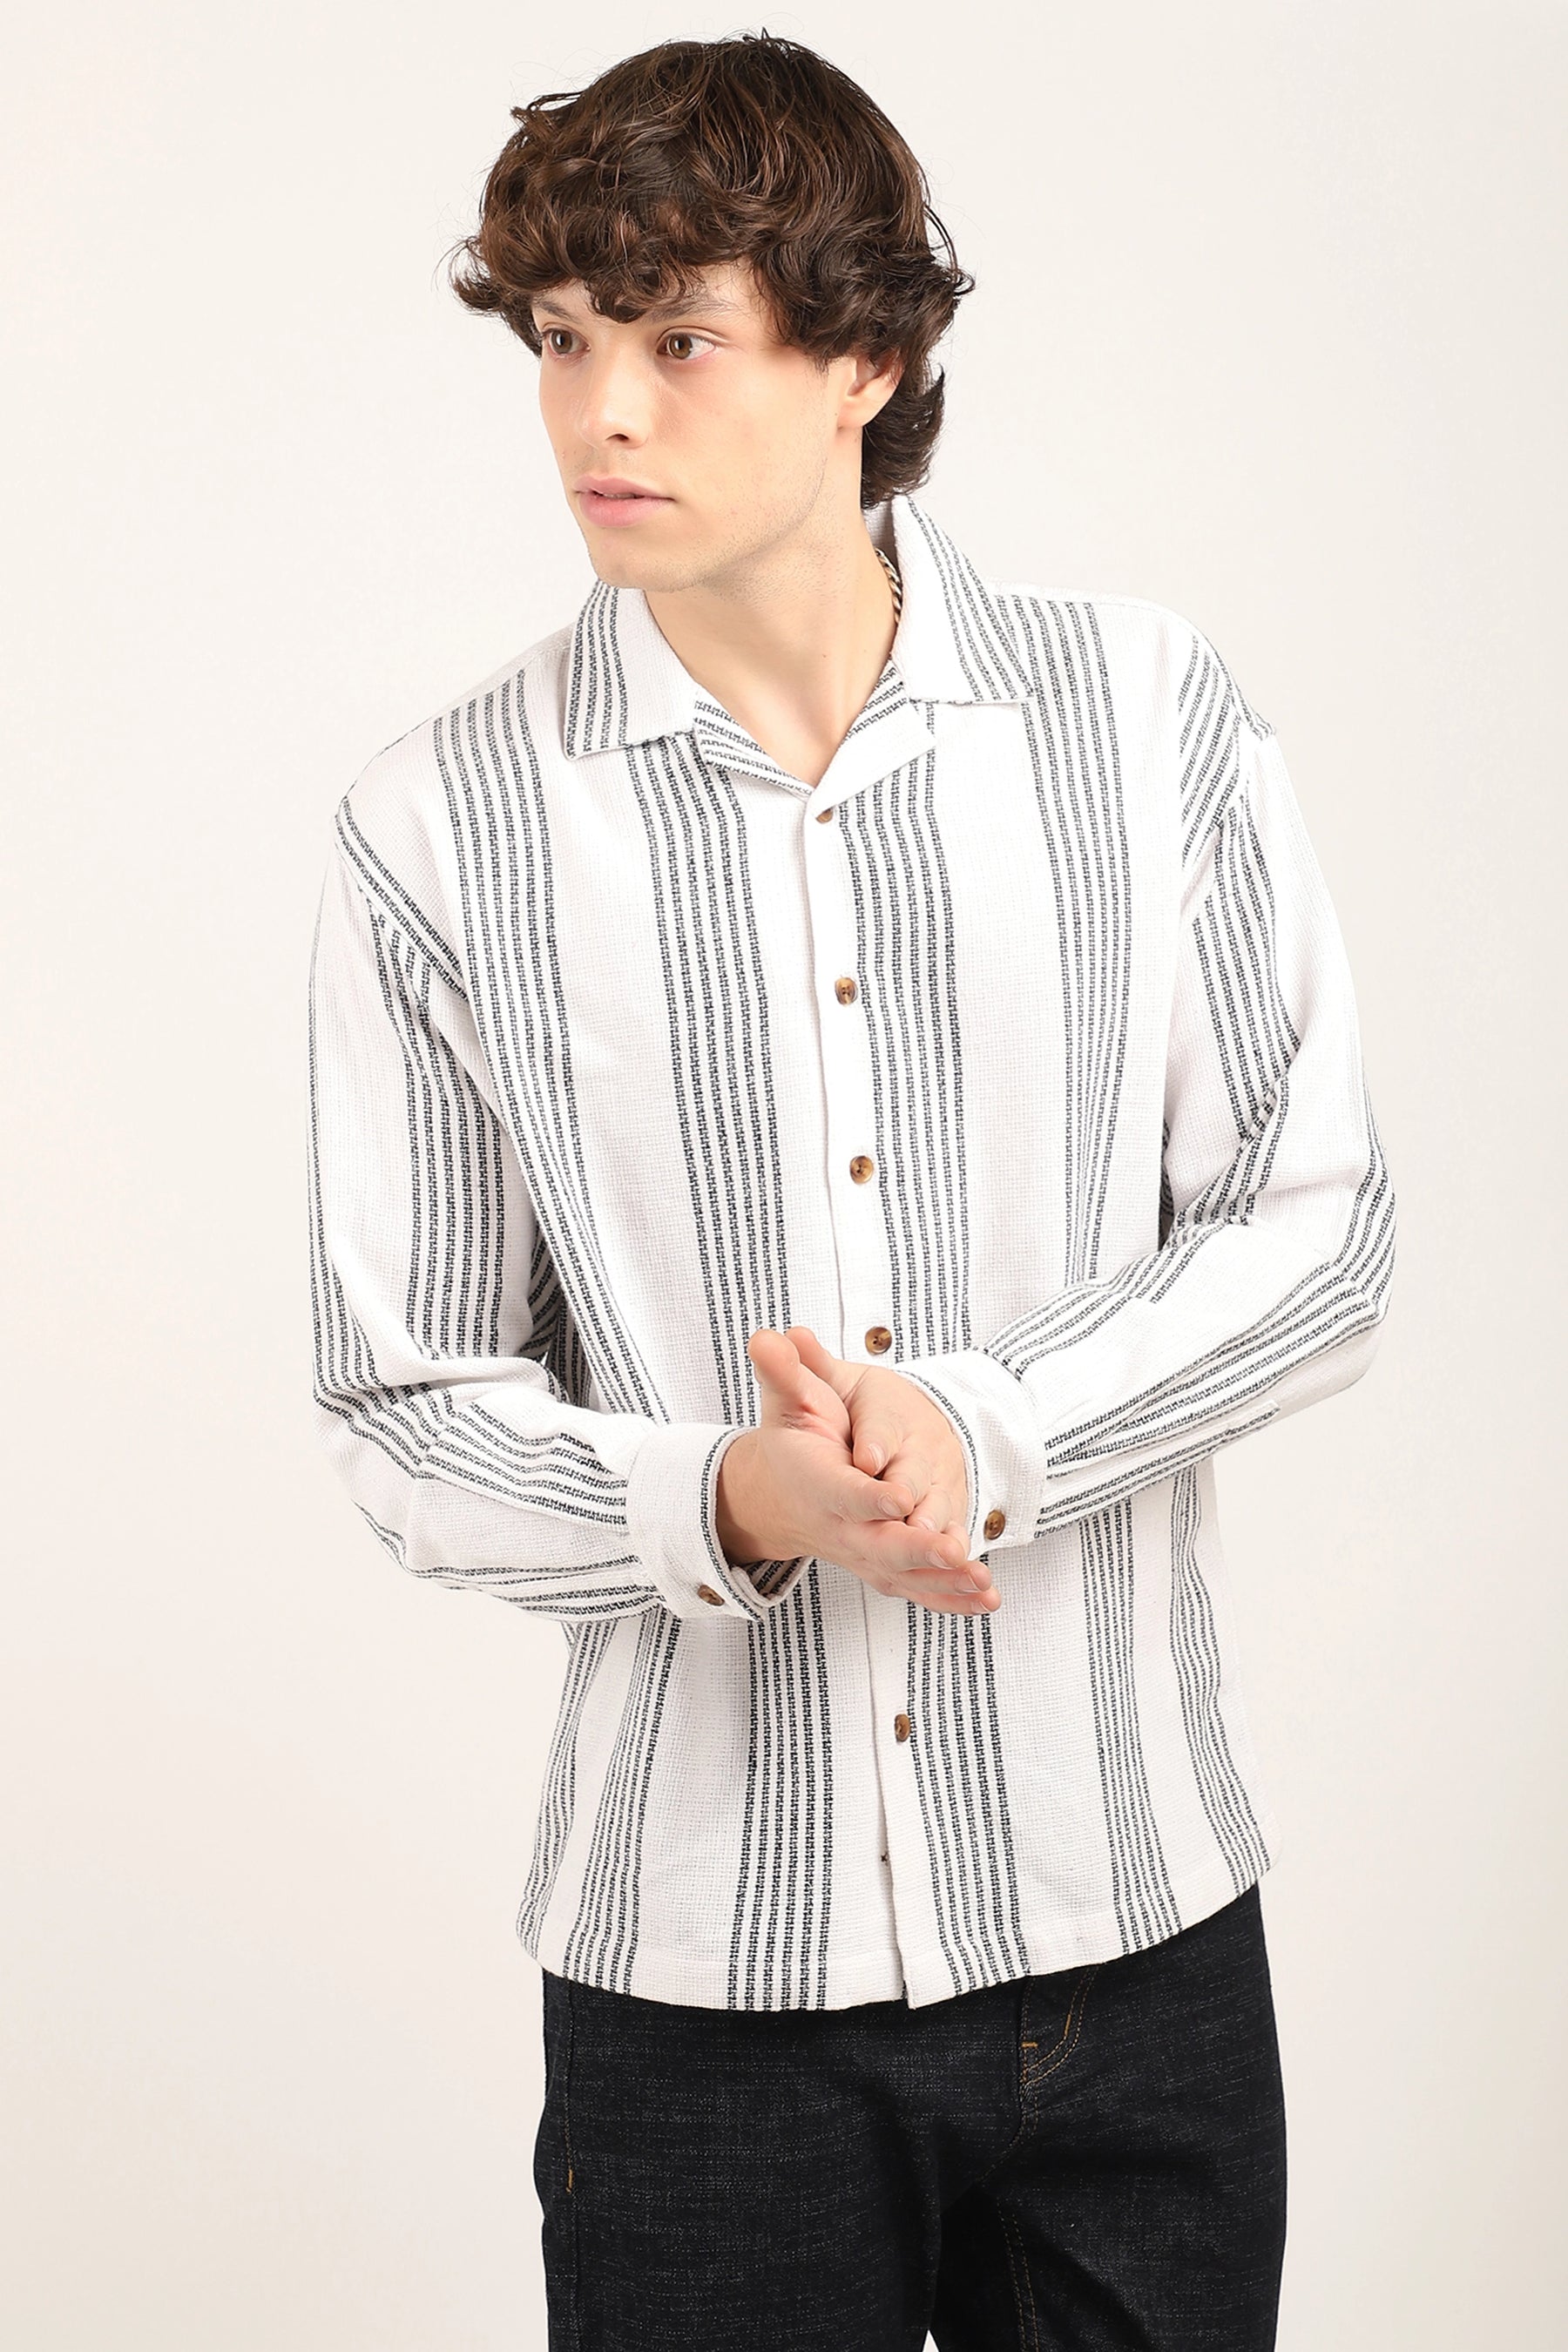 Black Lining Jute Knitted Stripe Shirt